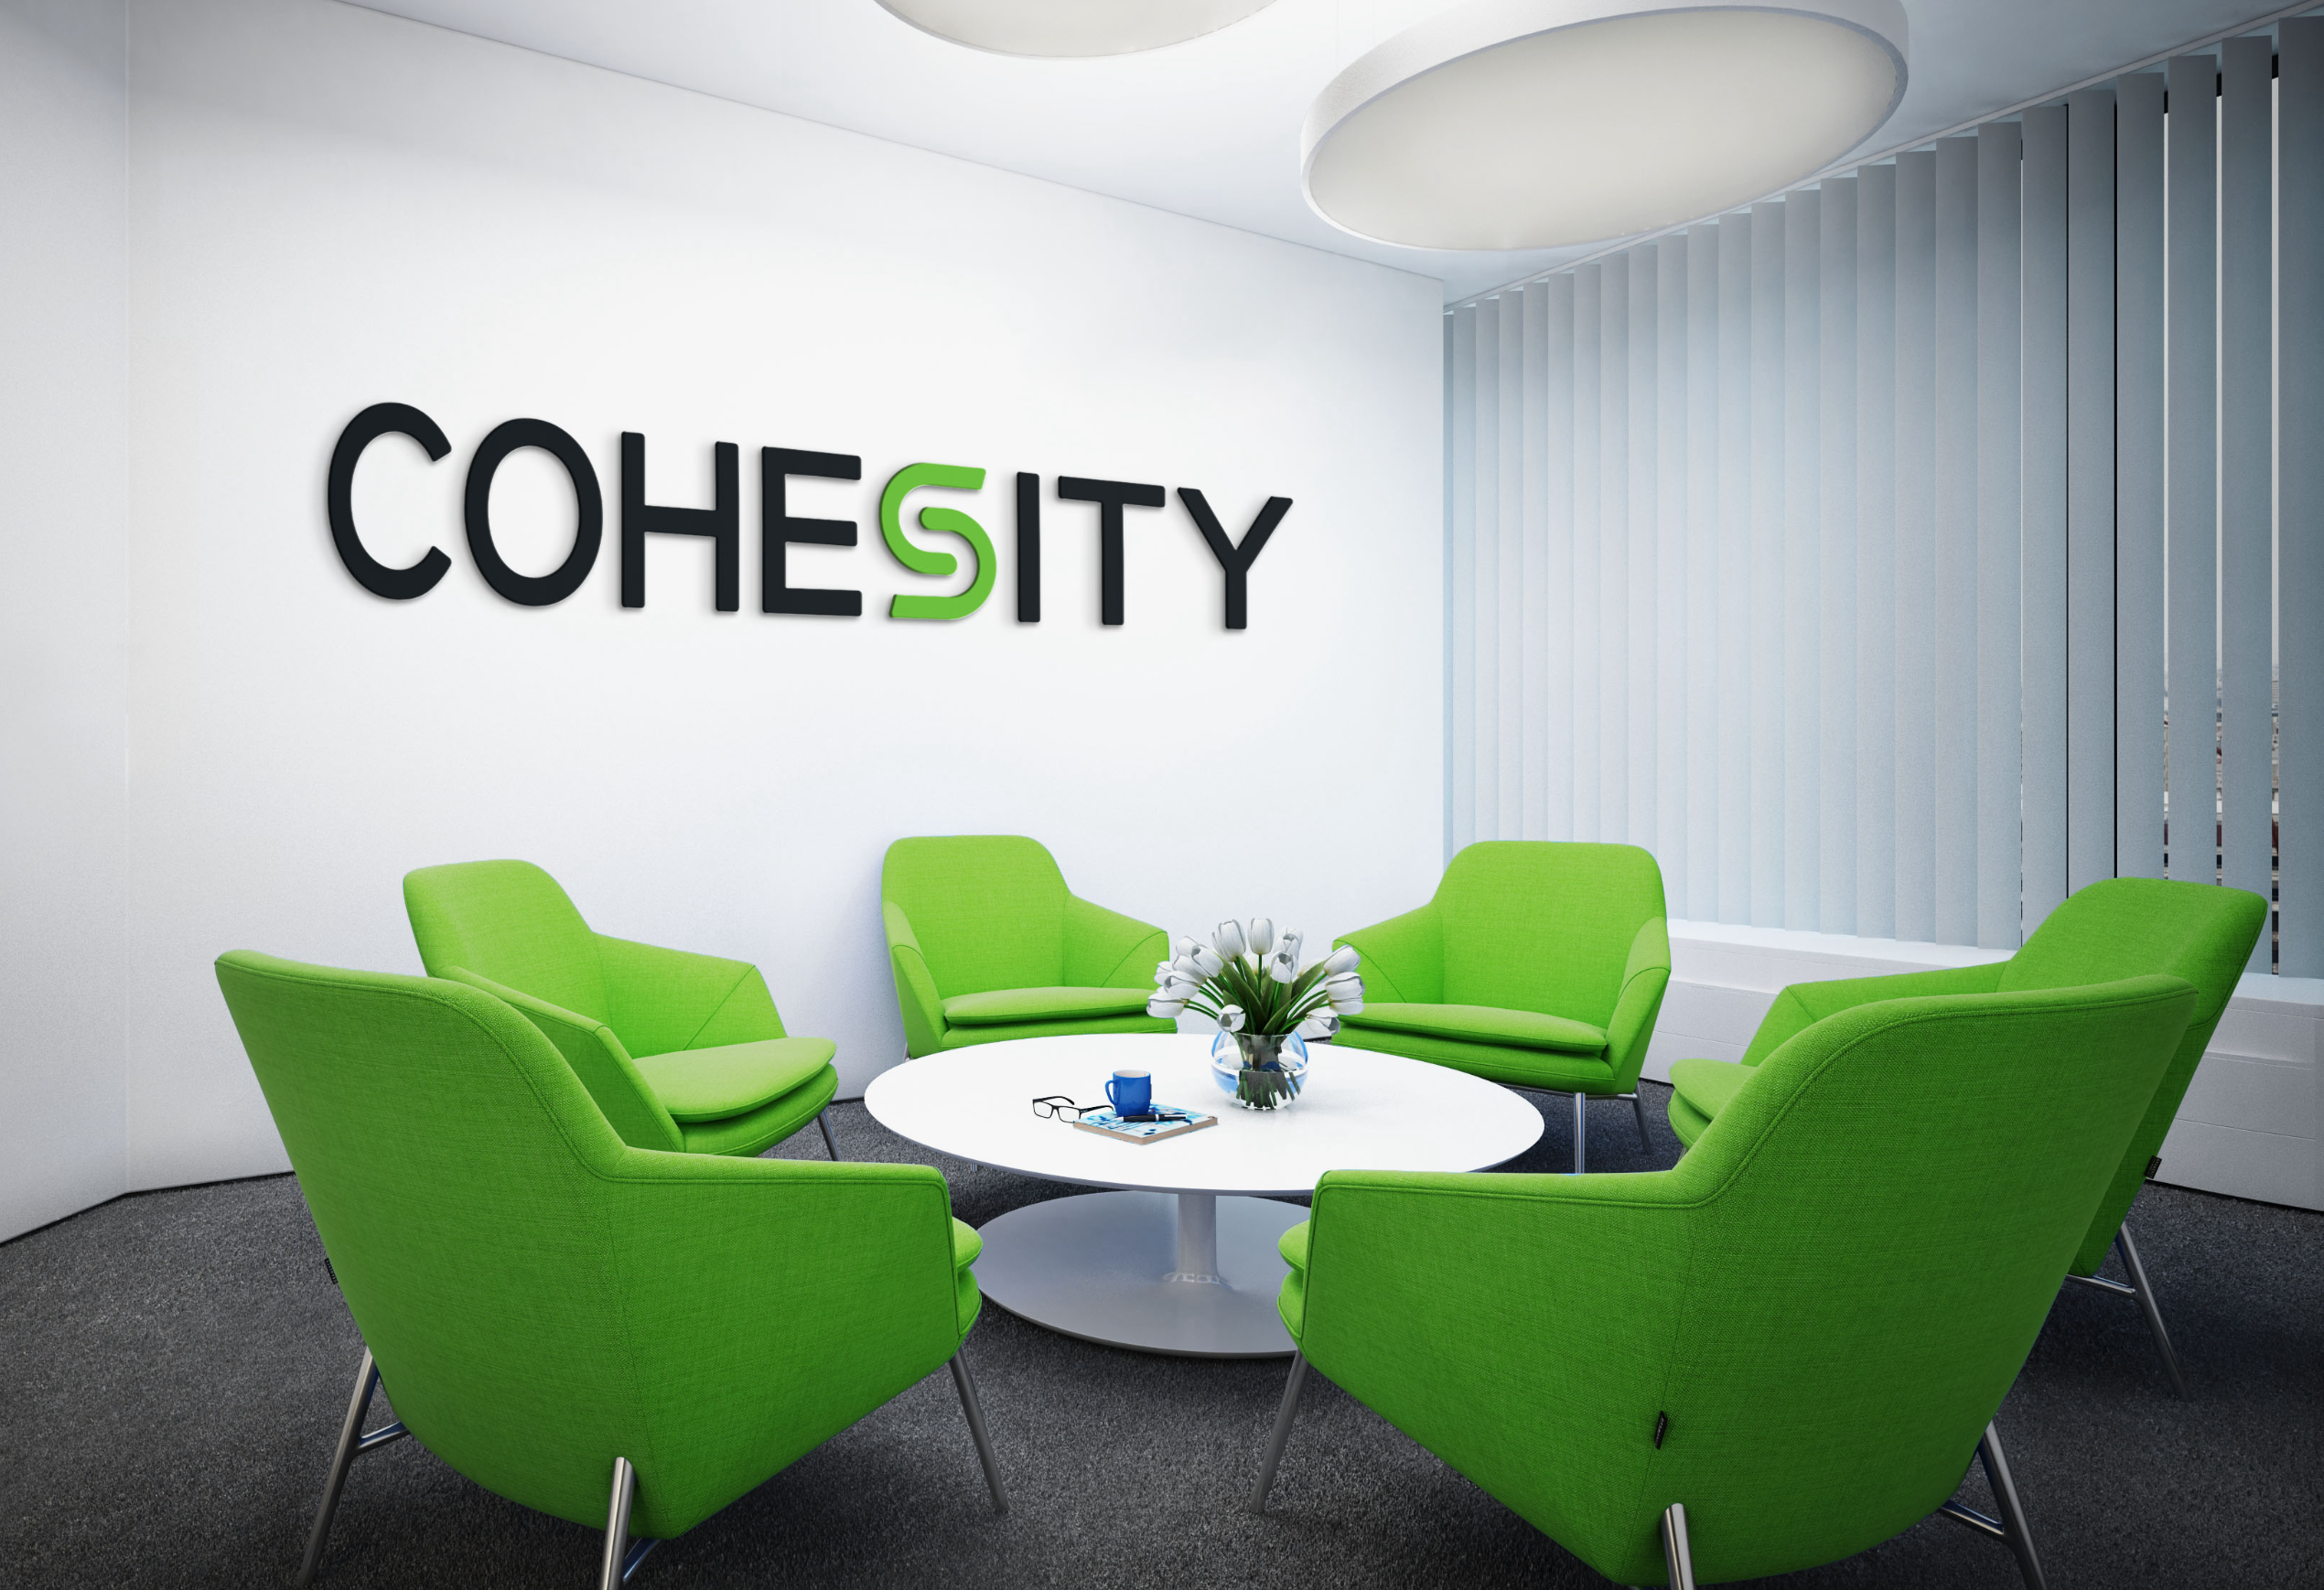 Cohesity office